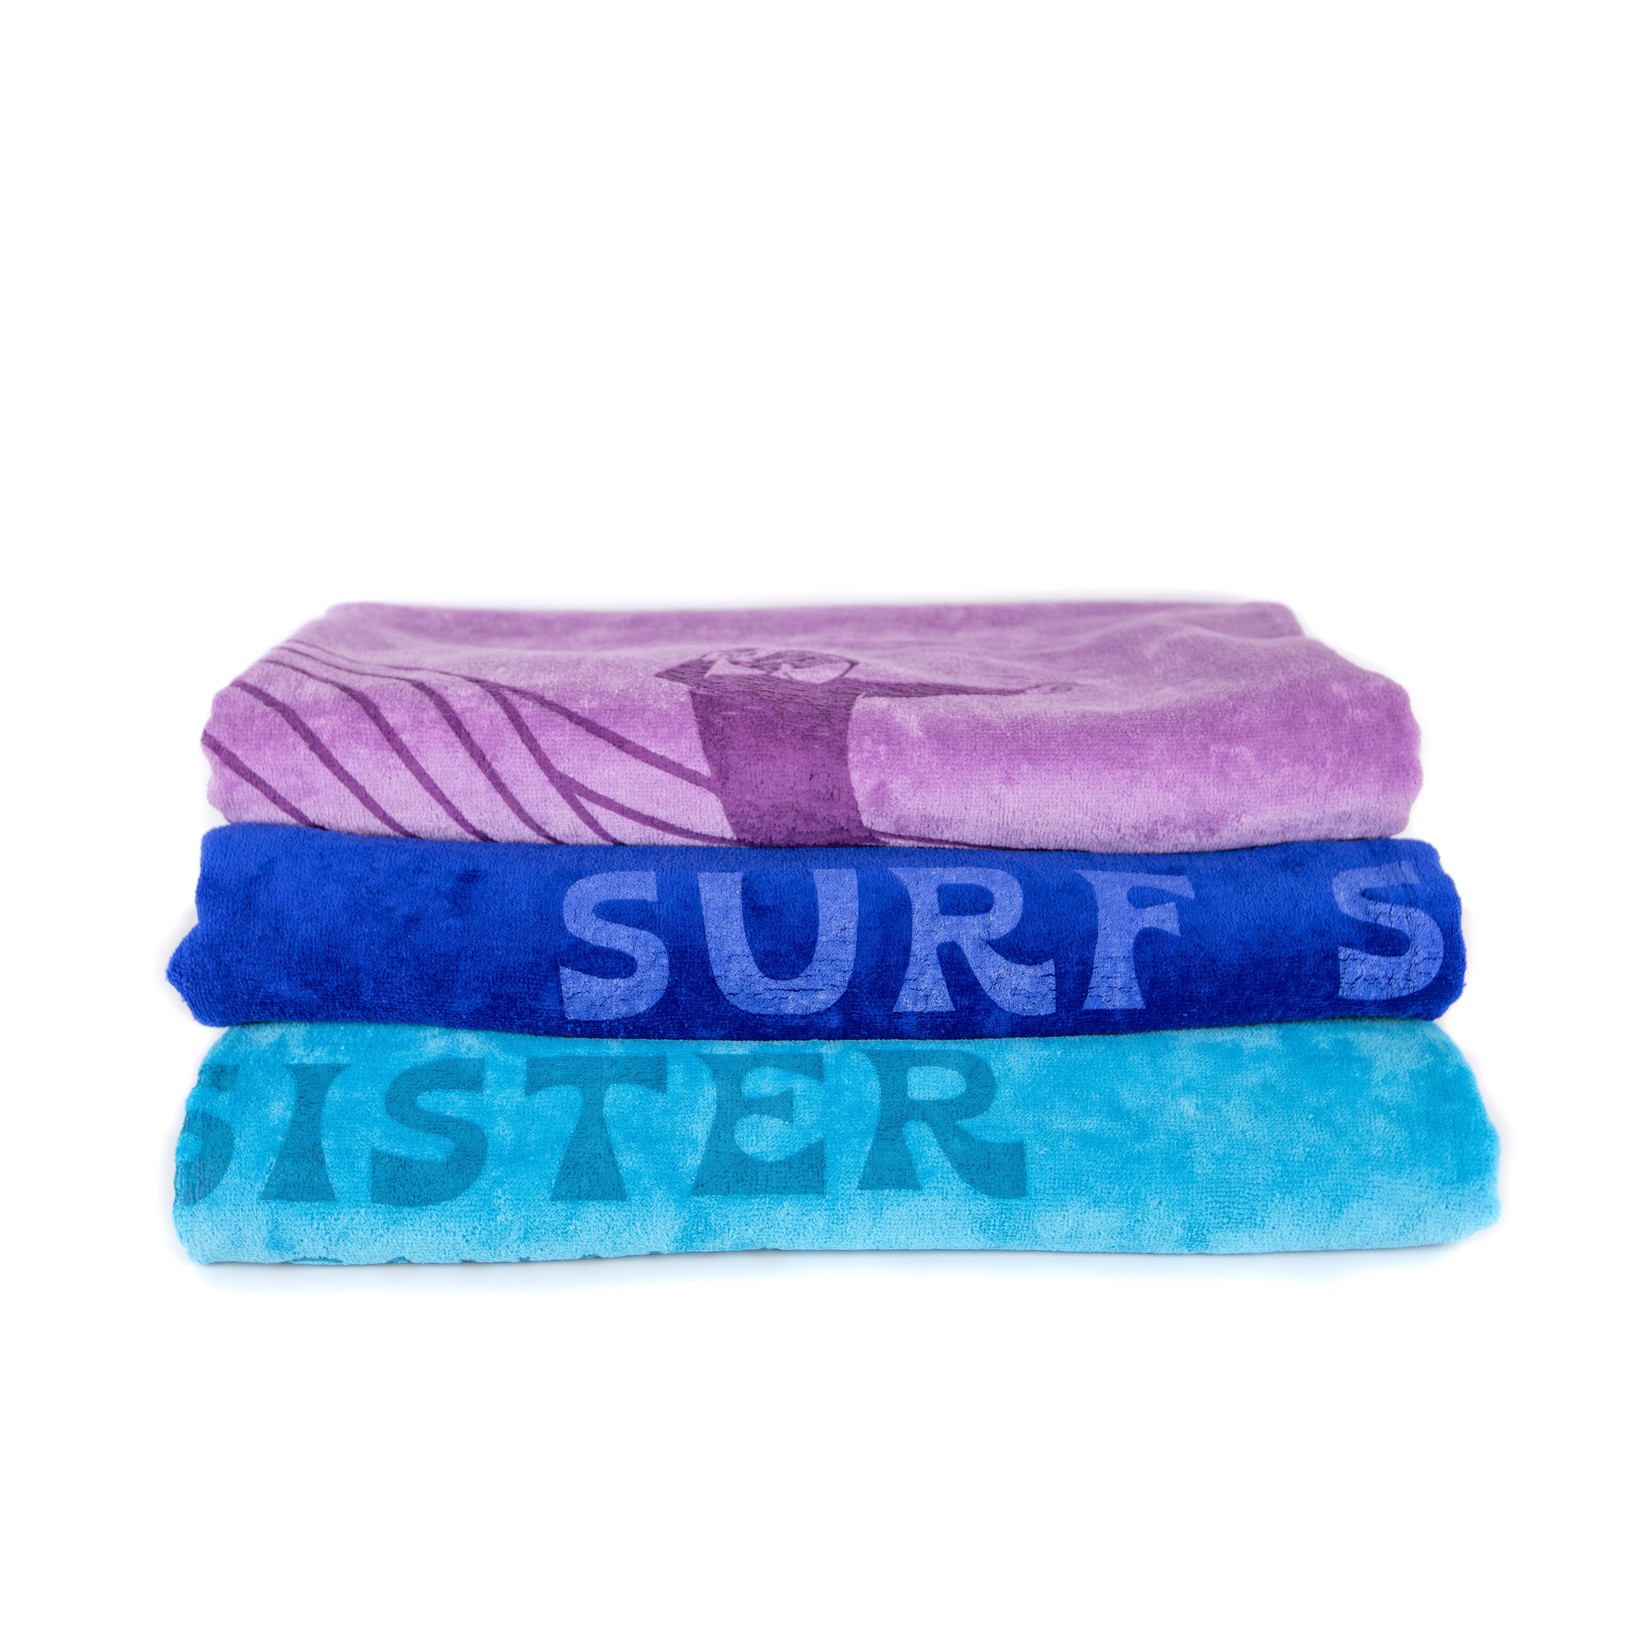 Surf Sister SURF SISTER TOWEL